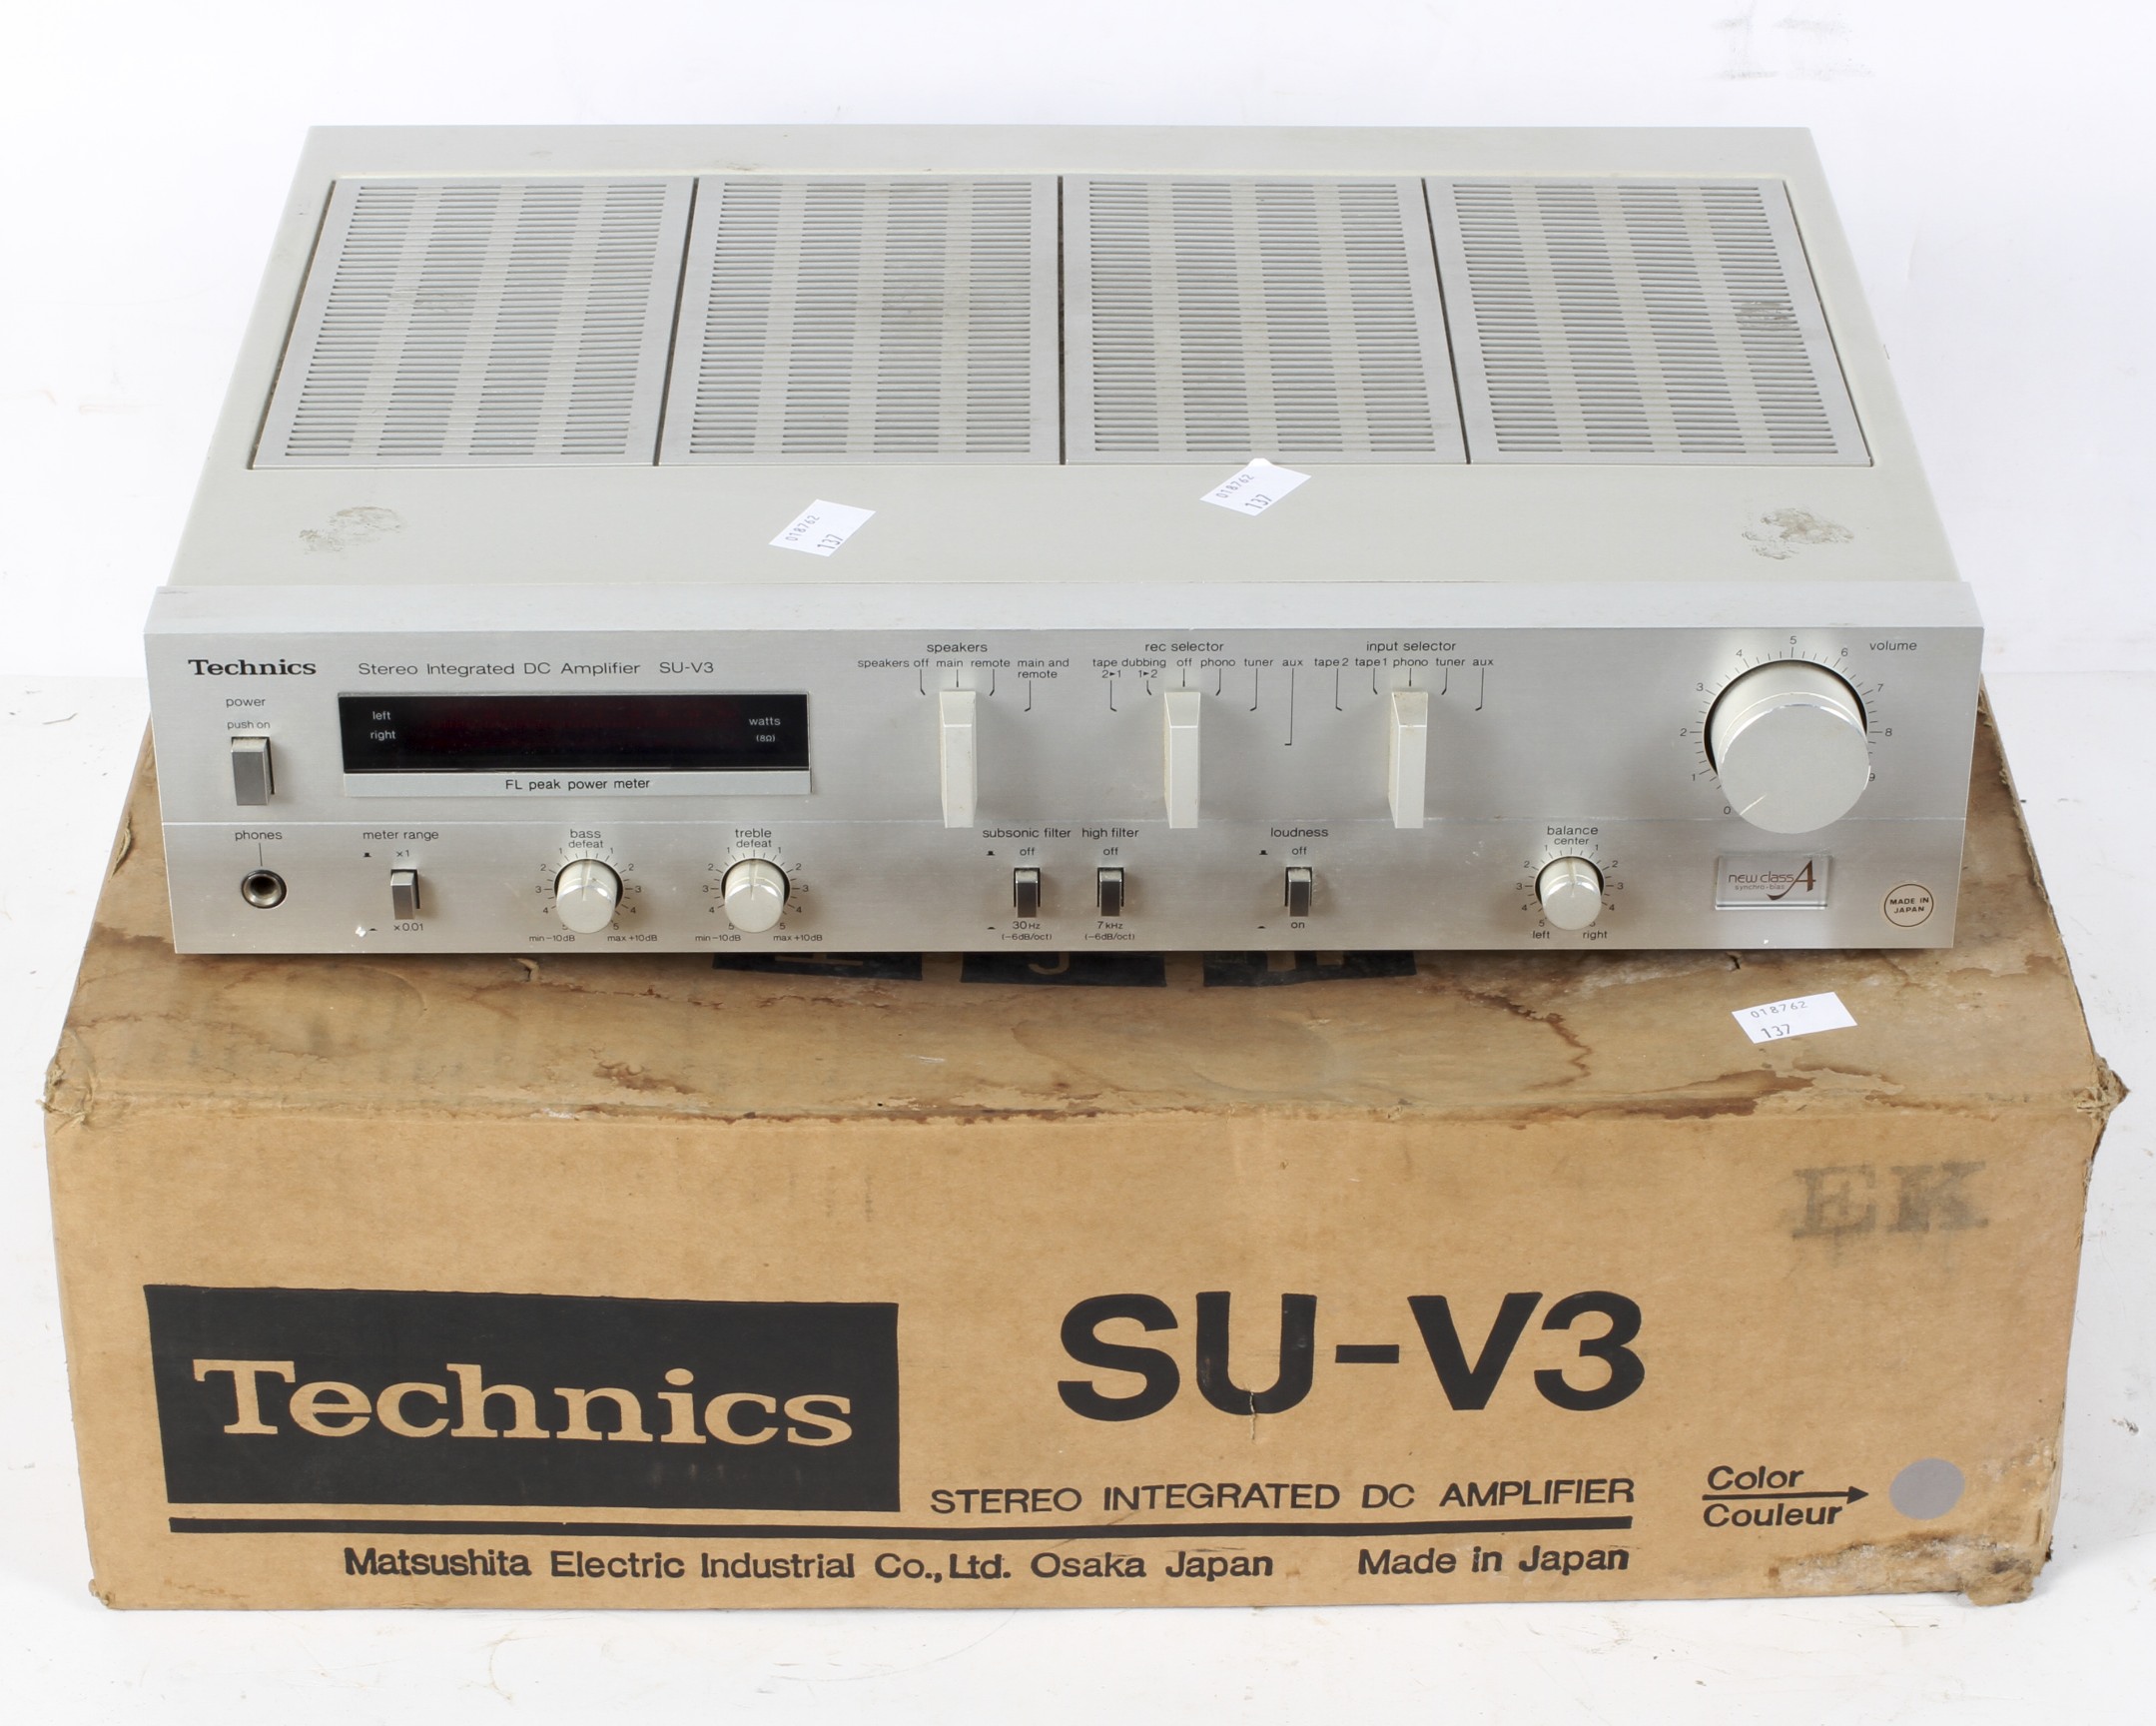 A Technics Stereo Integrated DC Amplifier SU-V3, serial no, AB1L08C034,